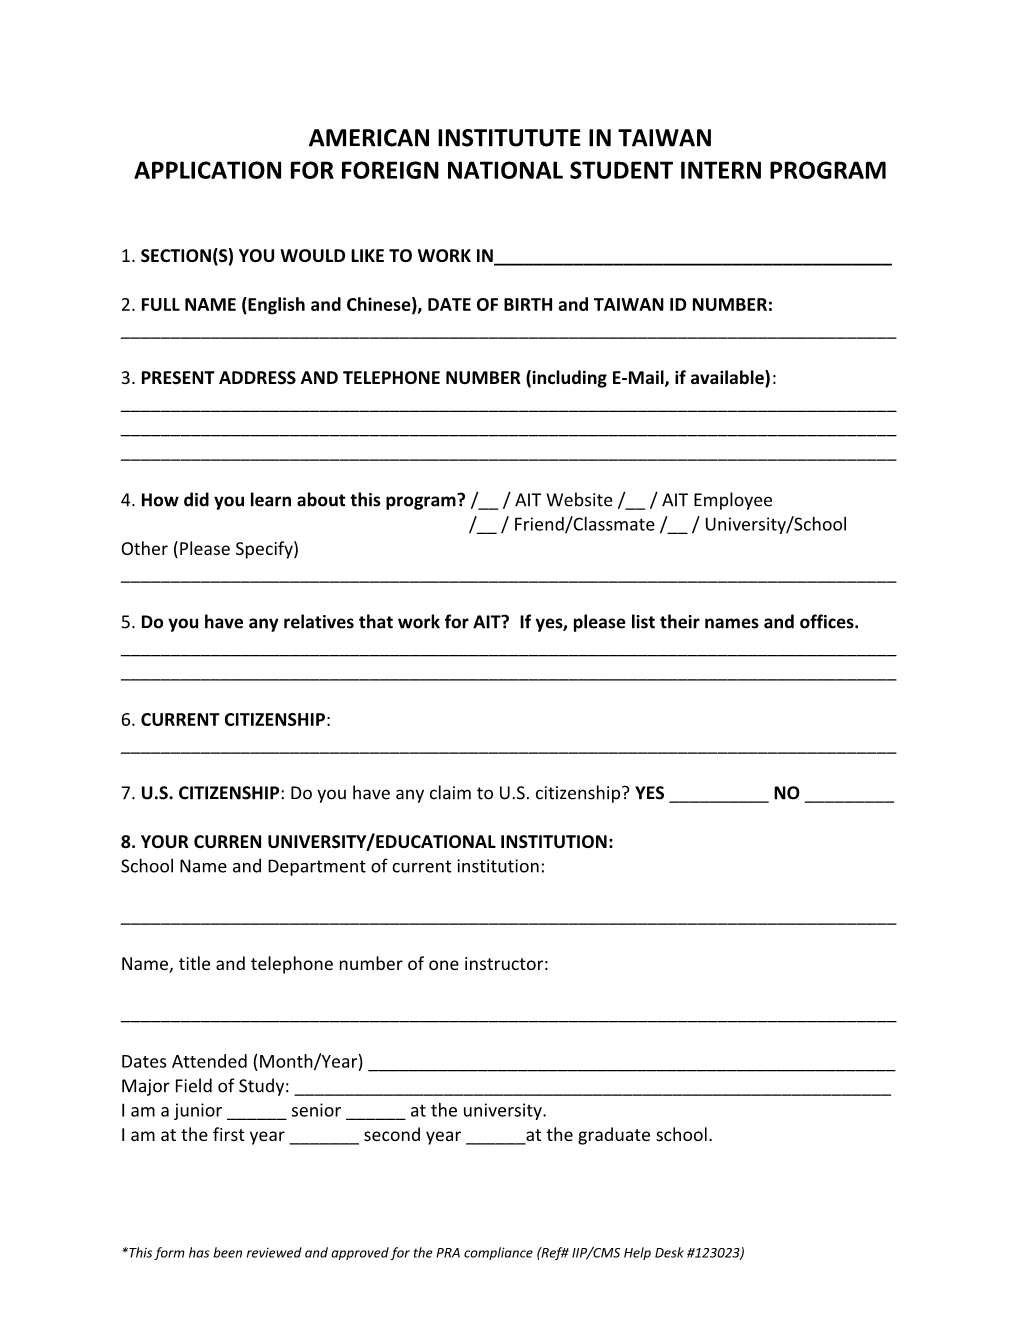 Application for Foreign Nationalstudent Intern Program